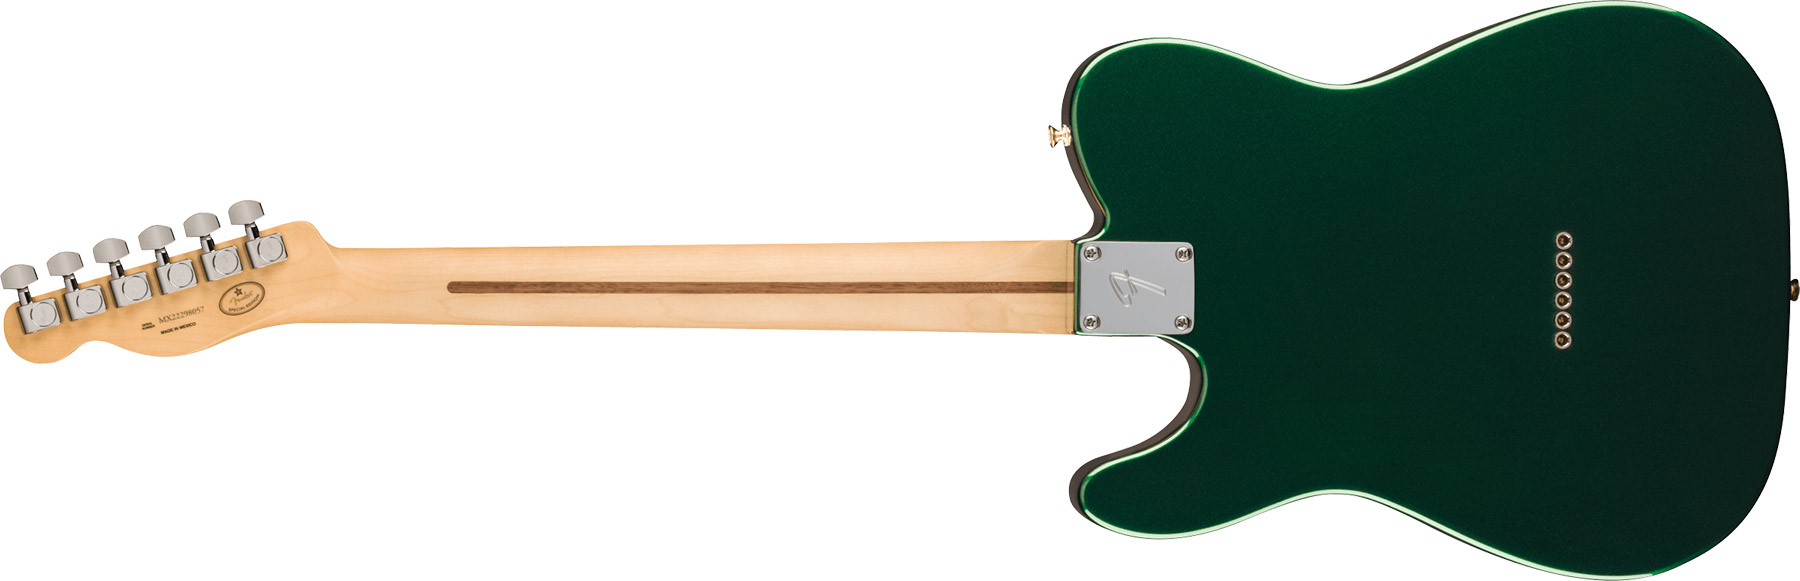 Fender Tele Player Ltd Mex 2s Seymour Duncan Mn - British Racing Green - Guitare Électrique Forme Tel - Variation 1